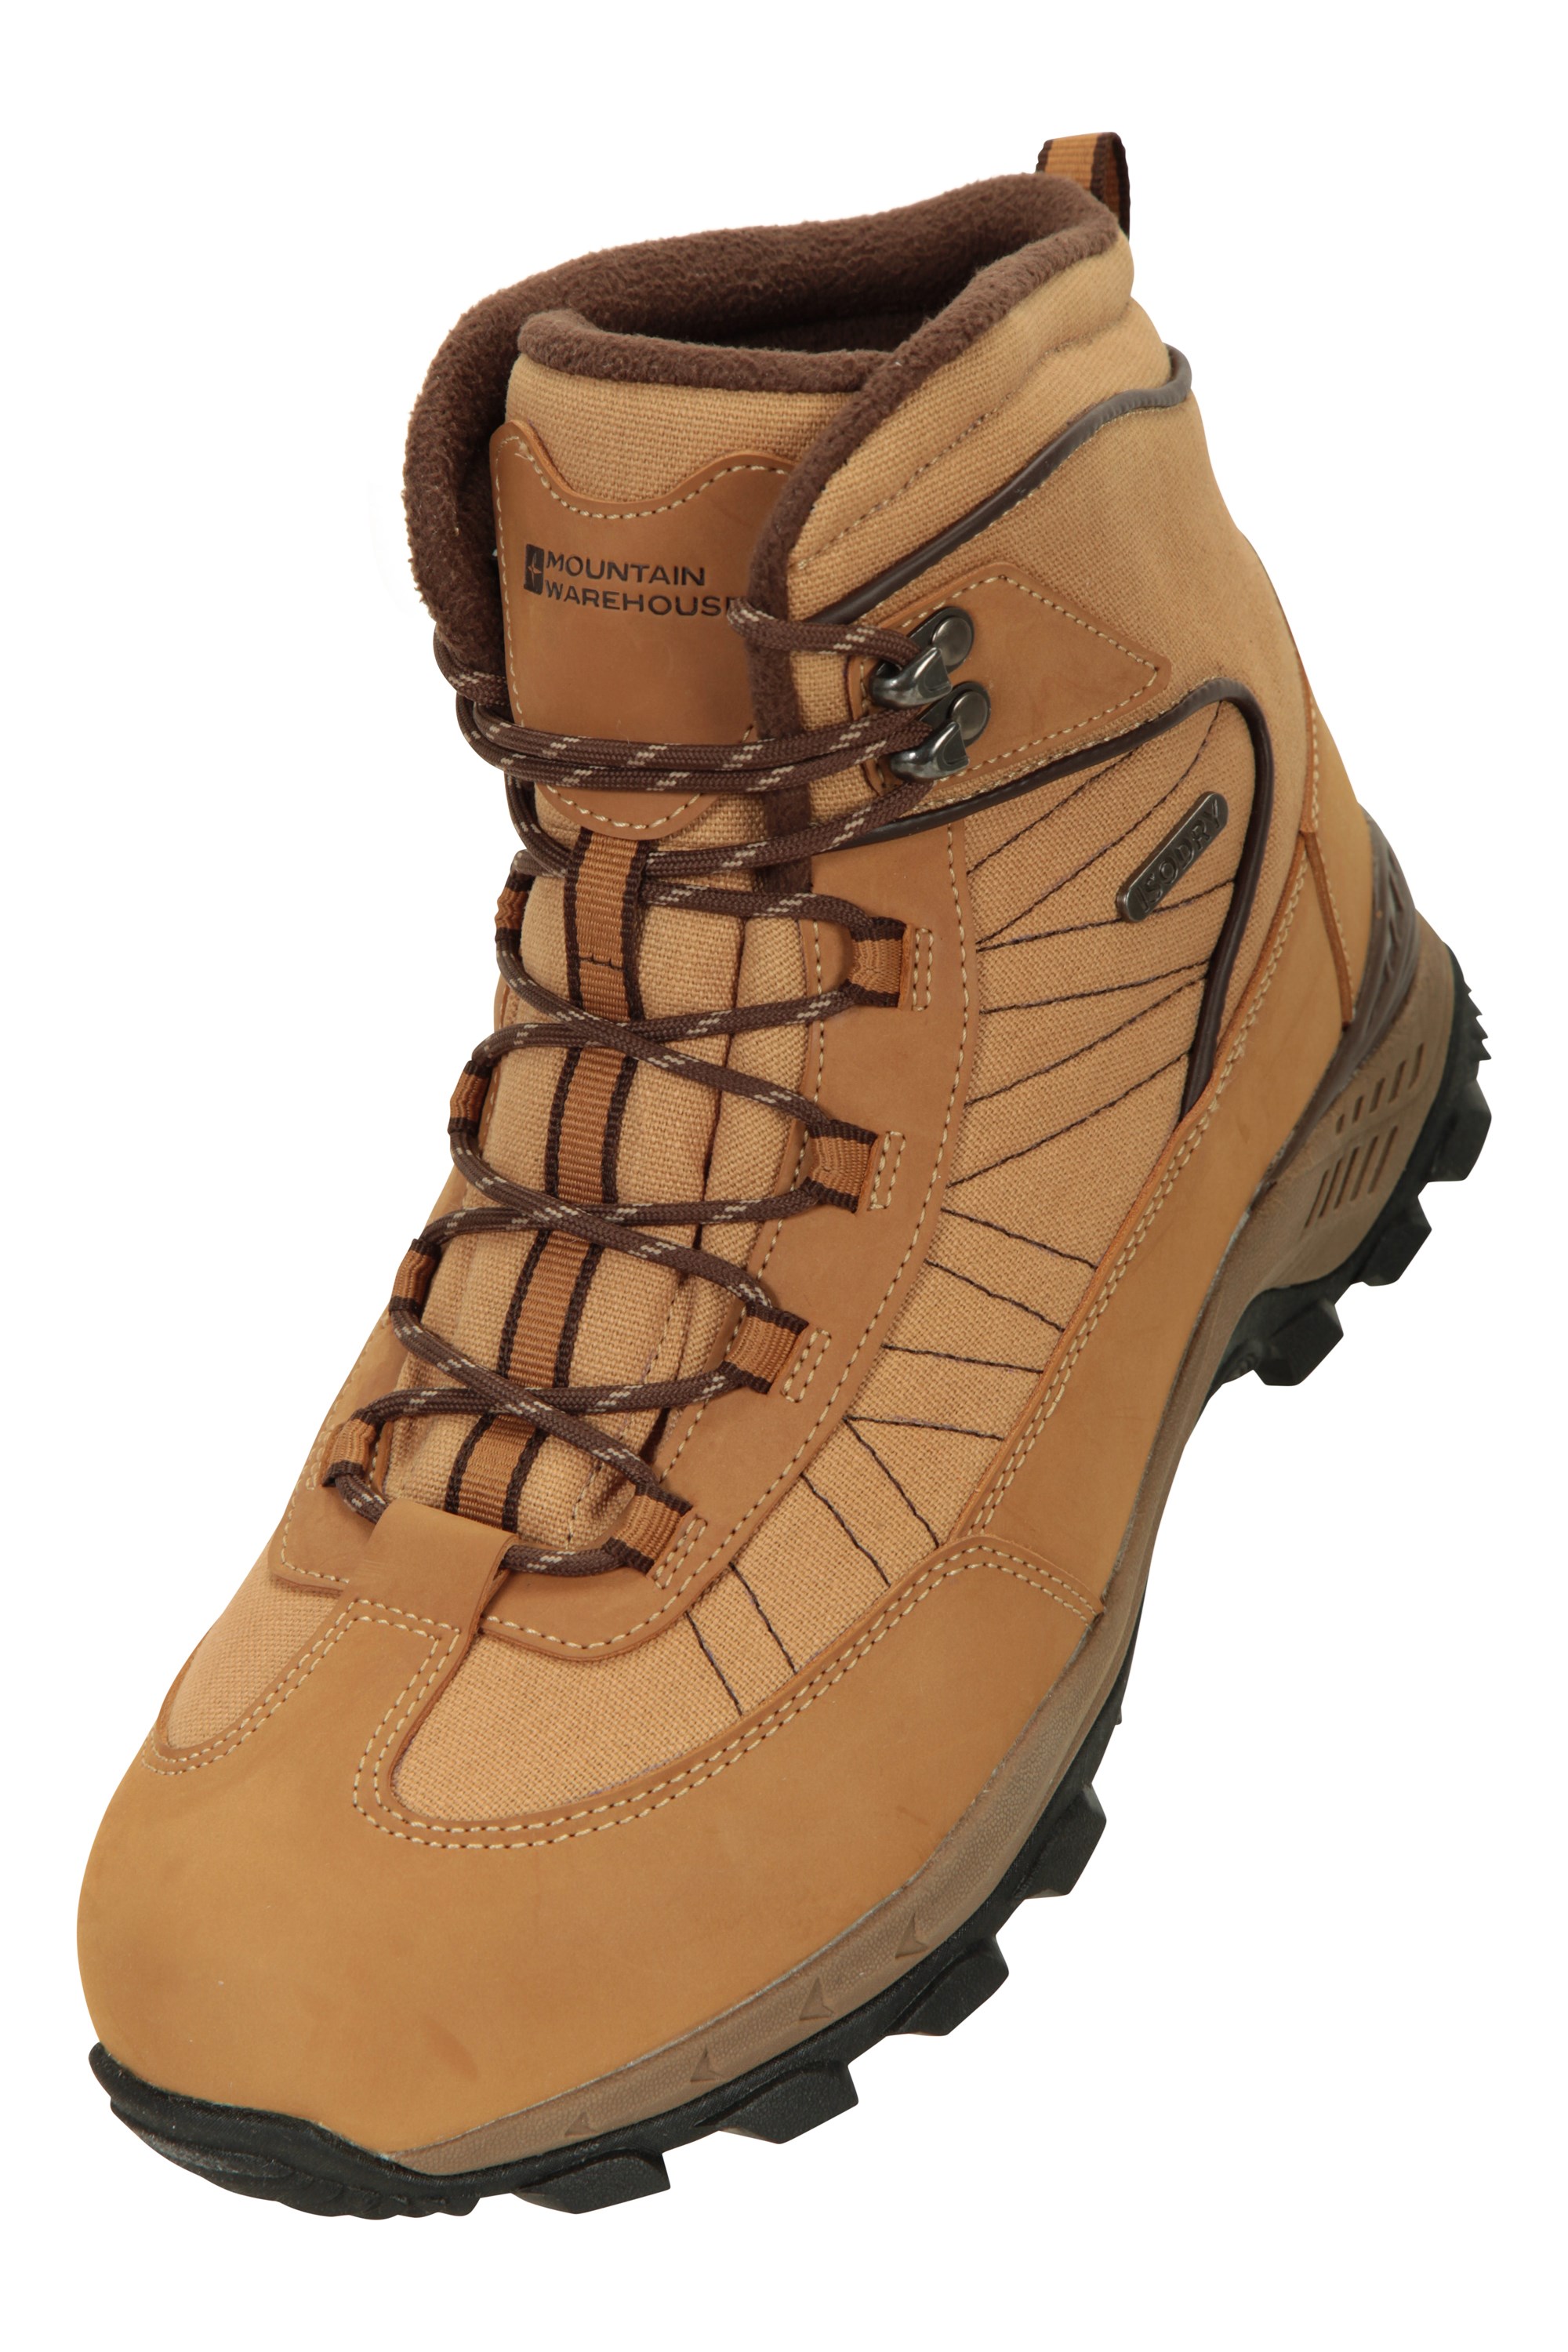 Mountain Warehouse Mens Boulder Winter Trekker Boots Waterproof Thermal Shoes 